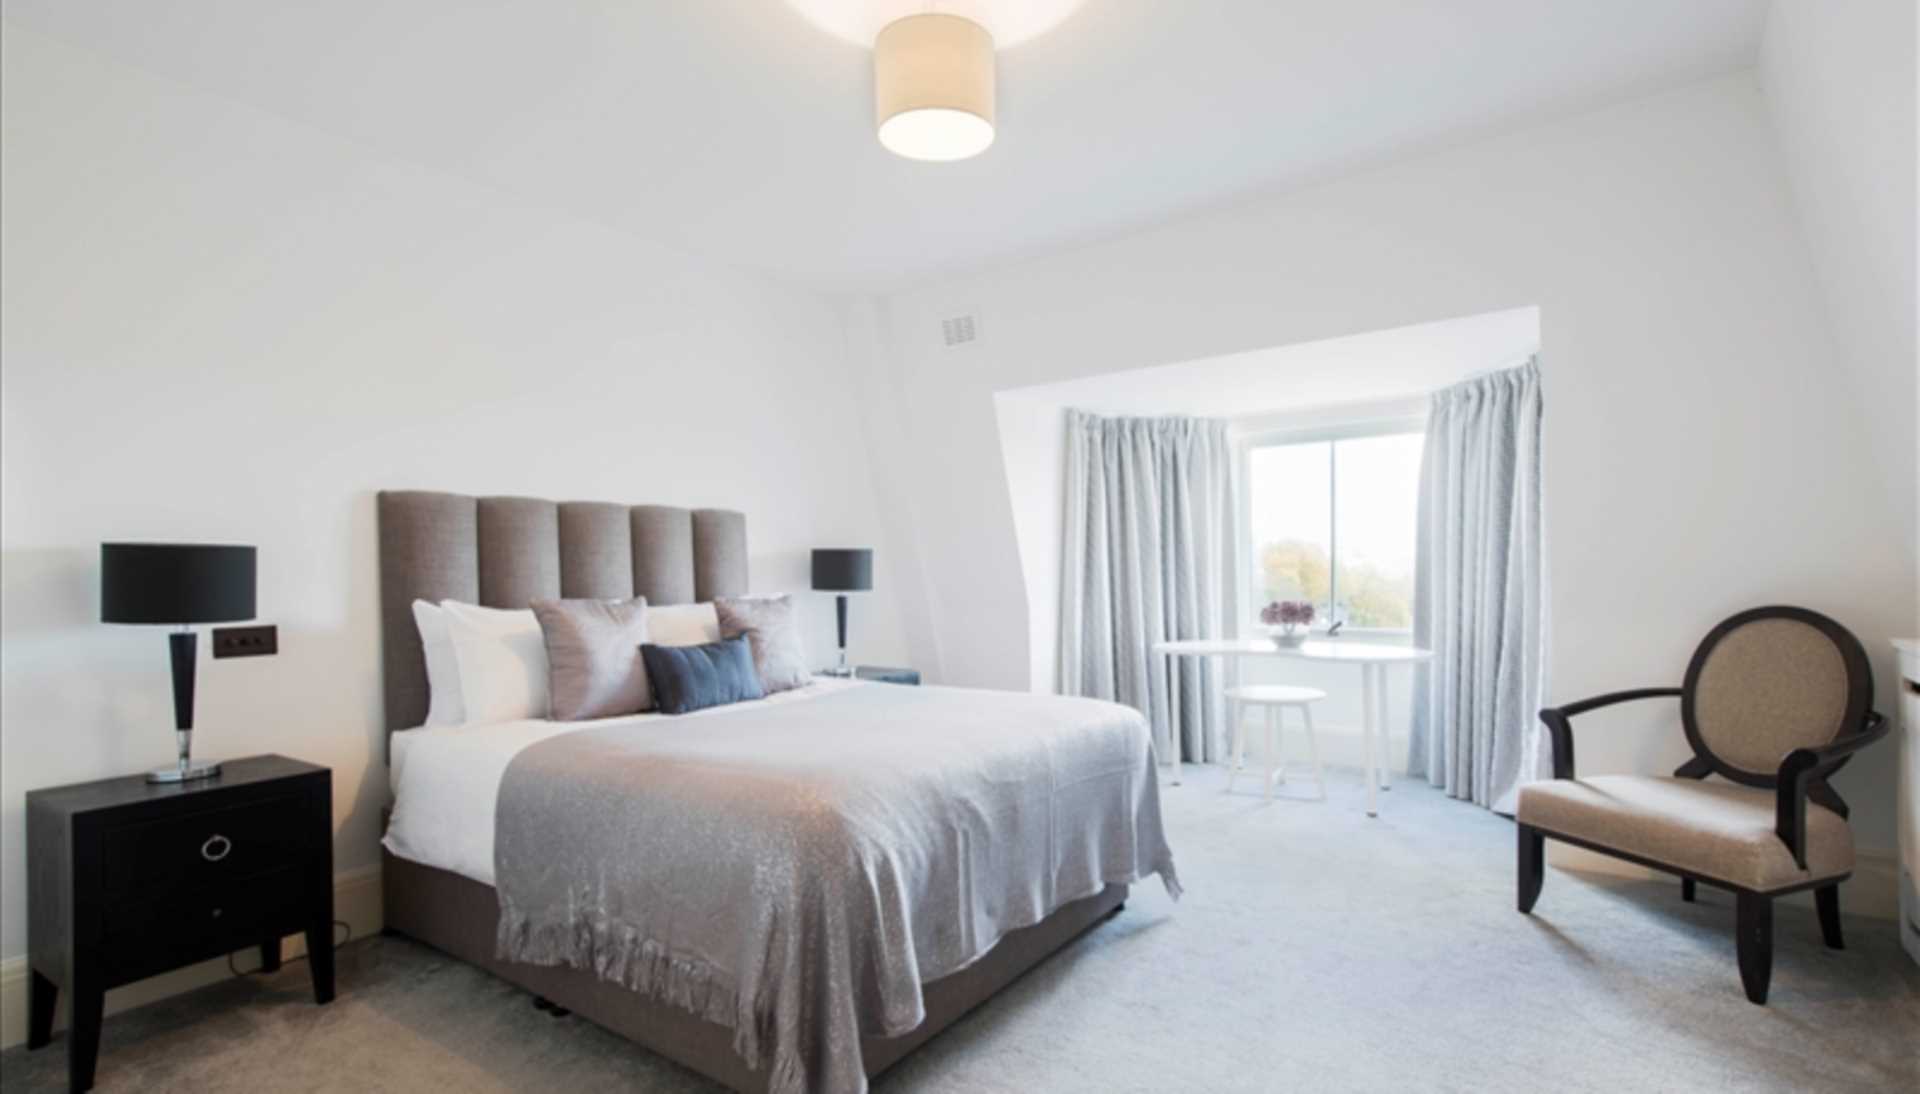 London NW8 7HY 5 bed penthouse rental property internal/external image-3